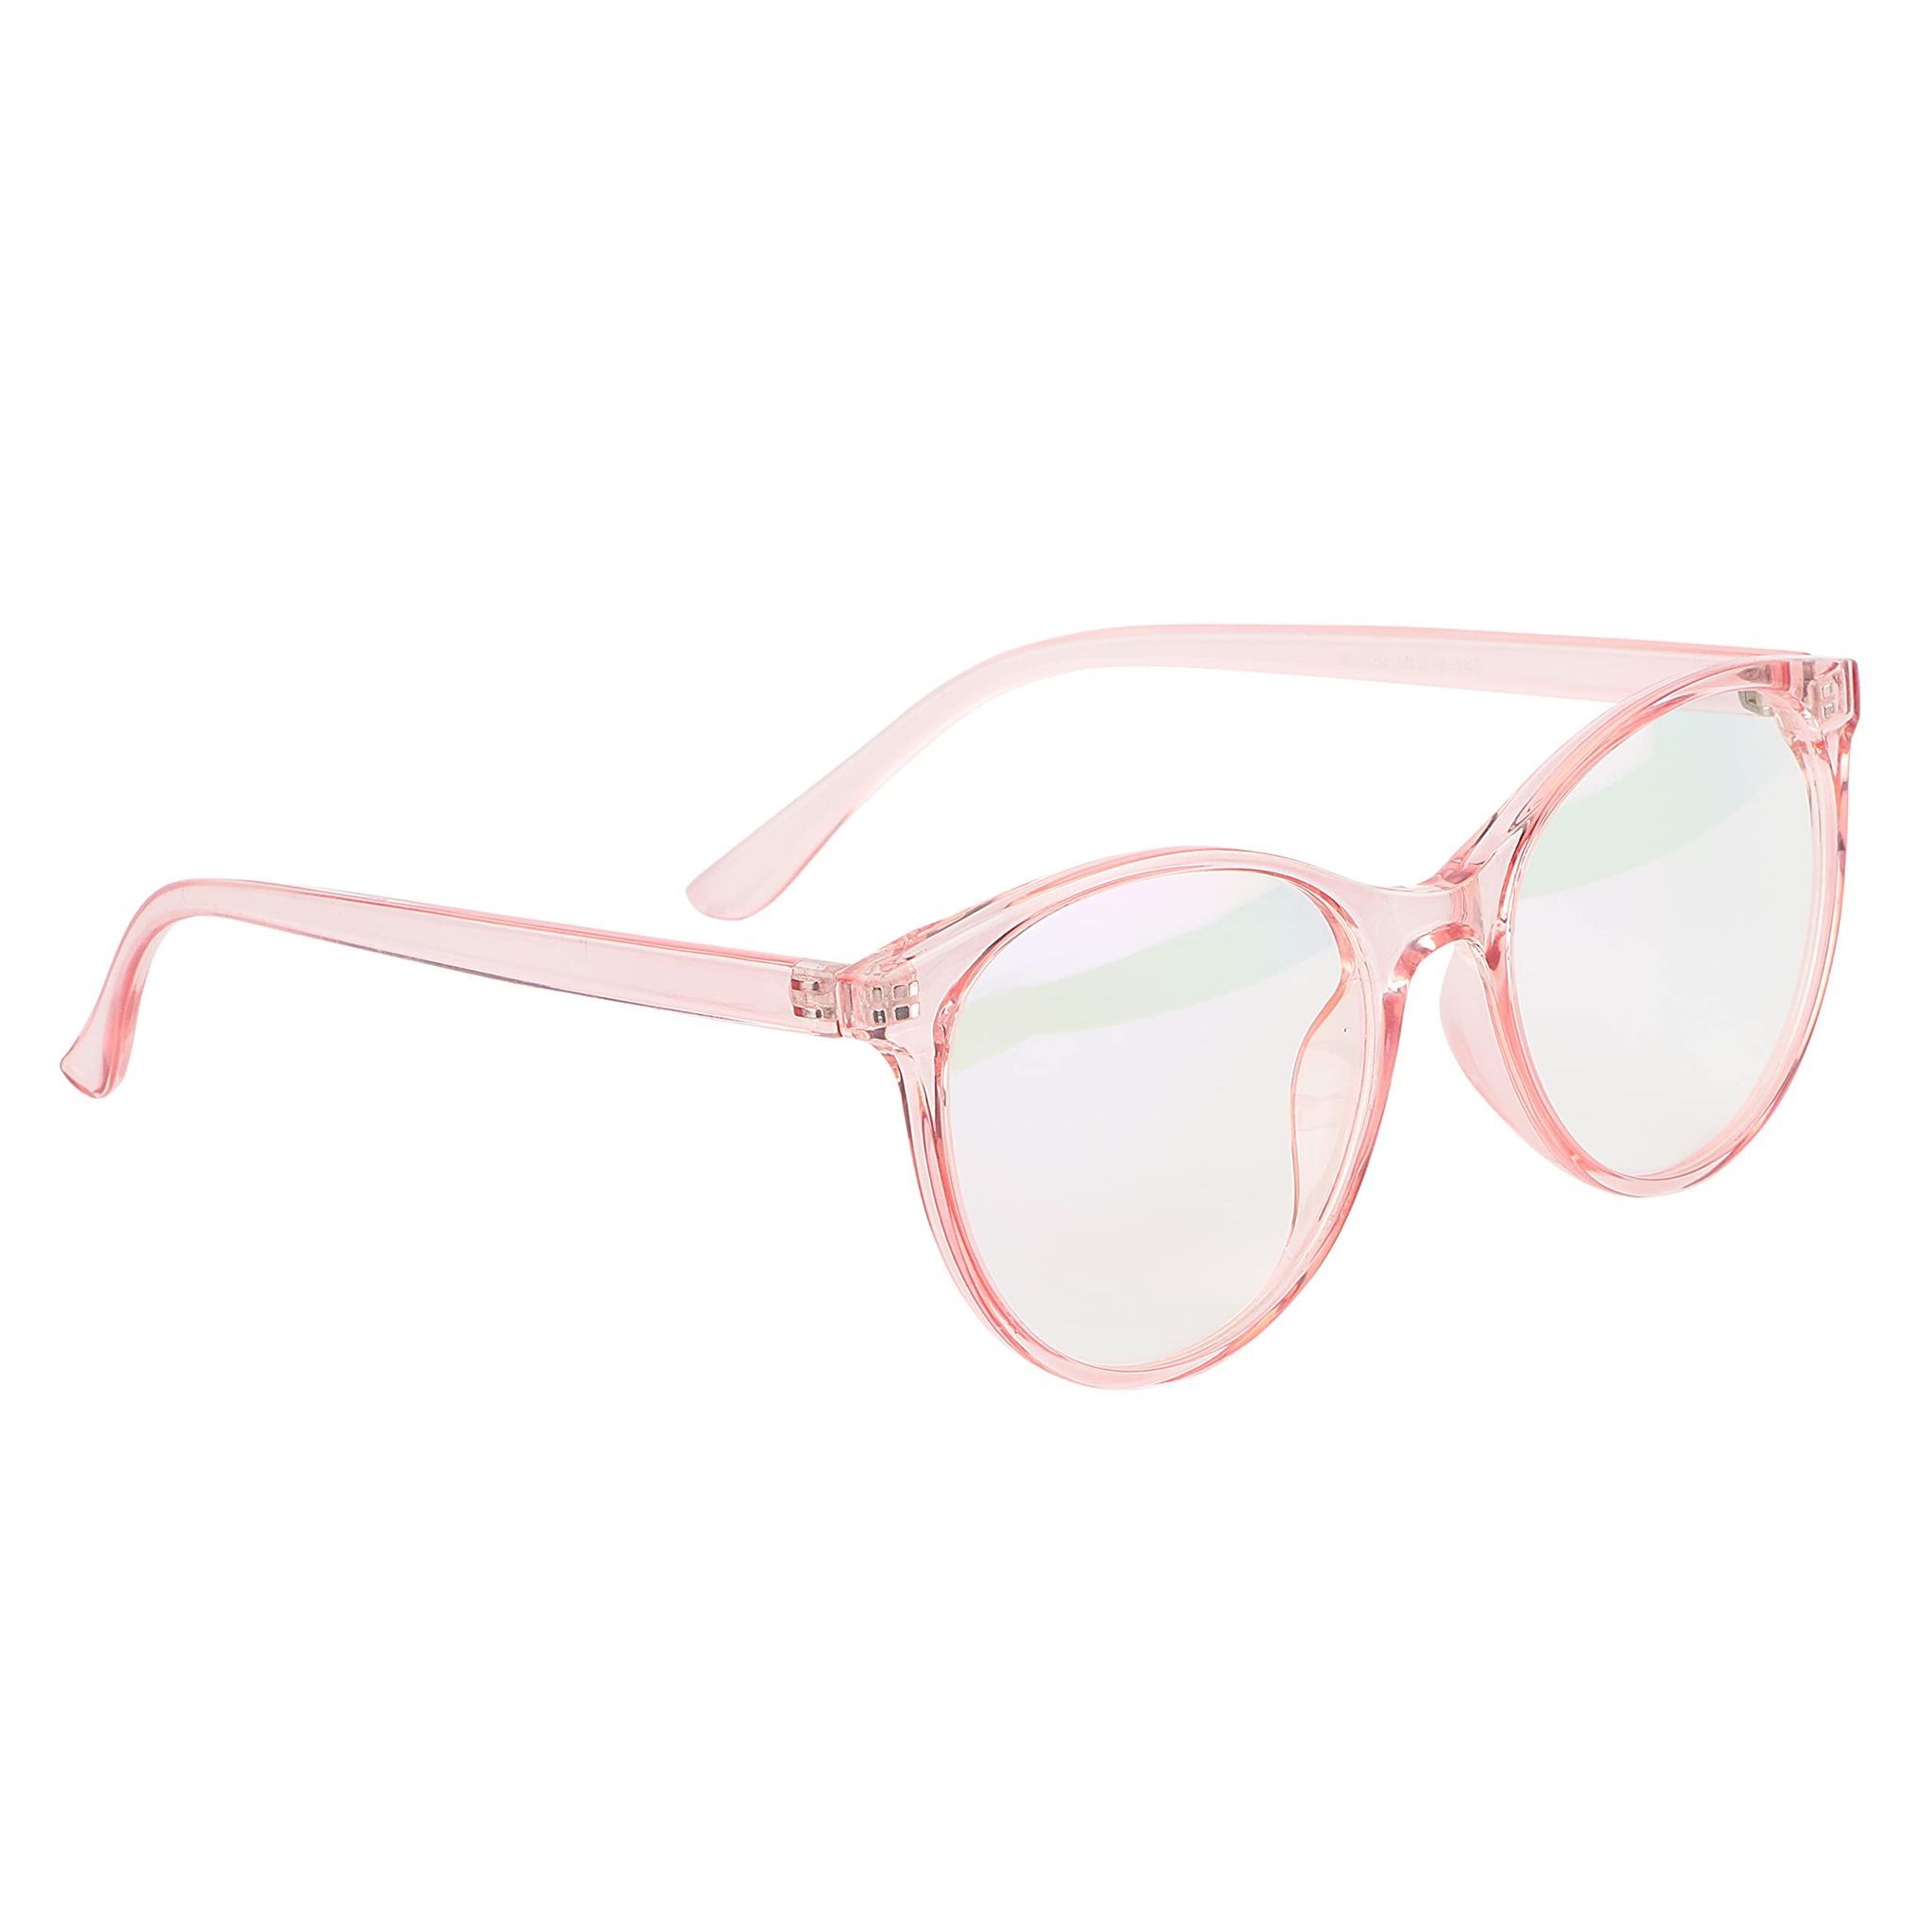 Jodykoes Oversize Fashionable Anti Glare Round Frame (Pink)